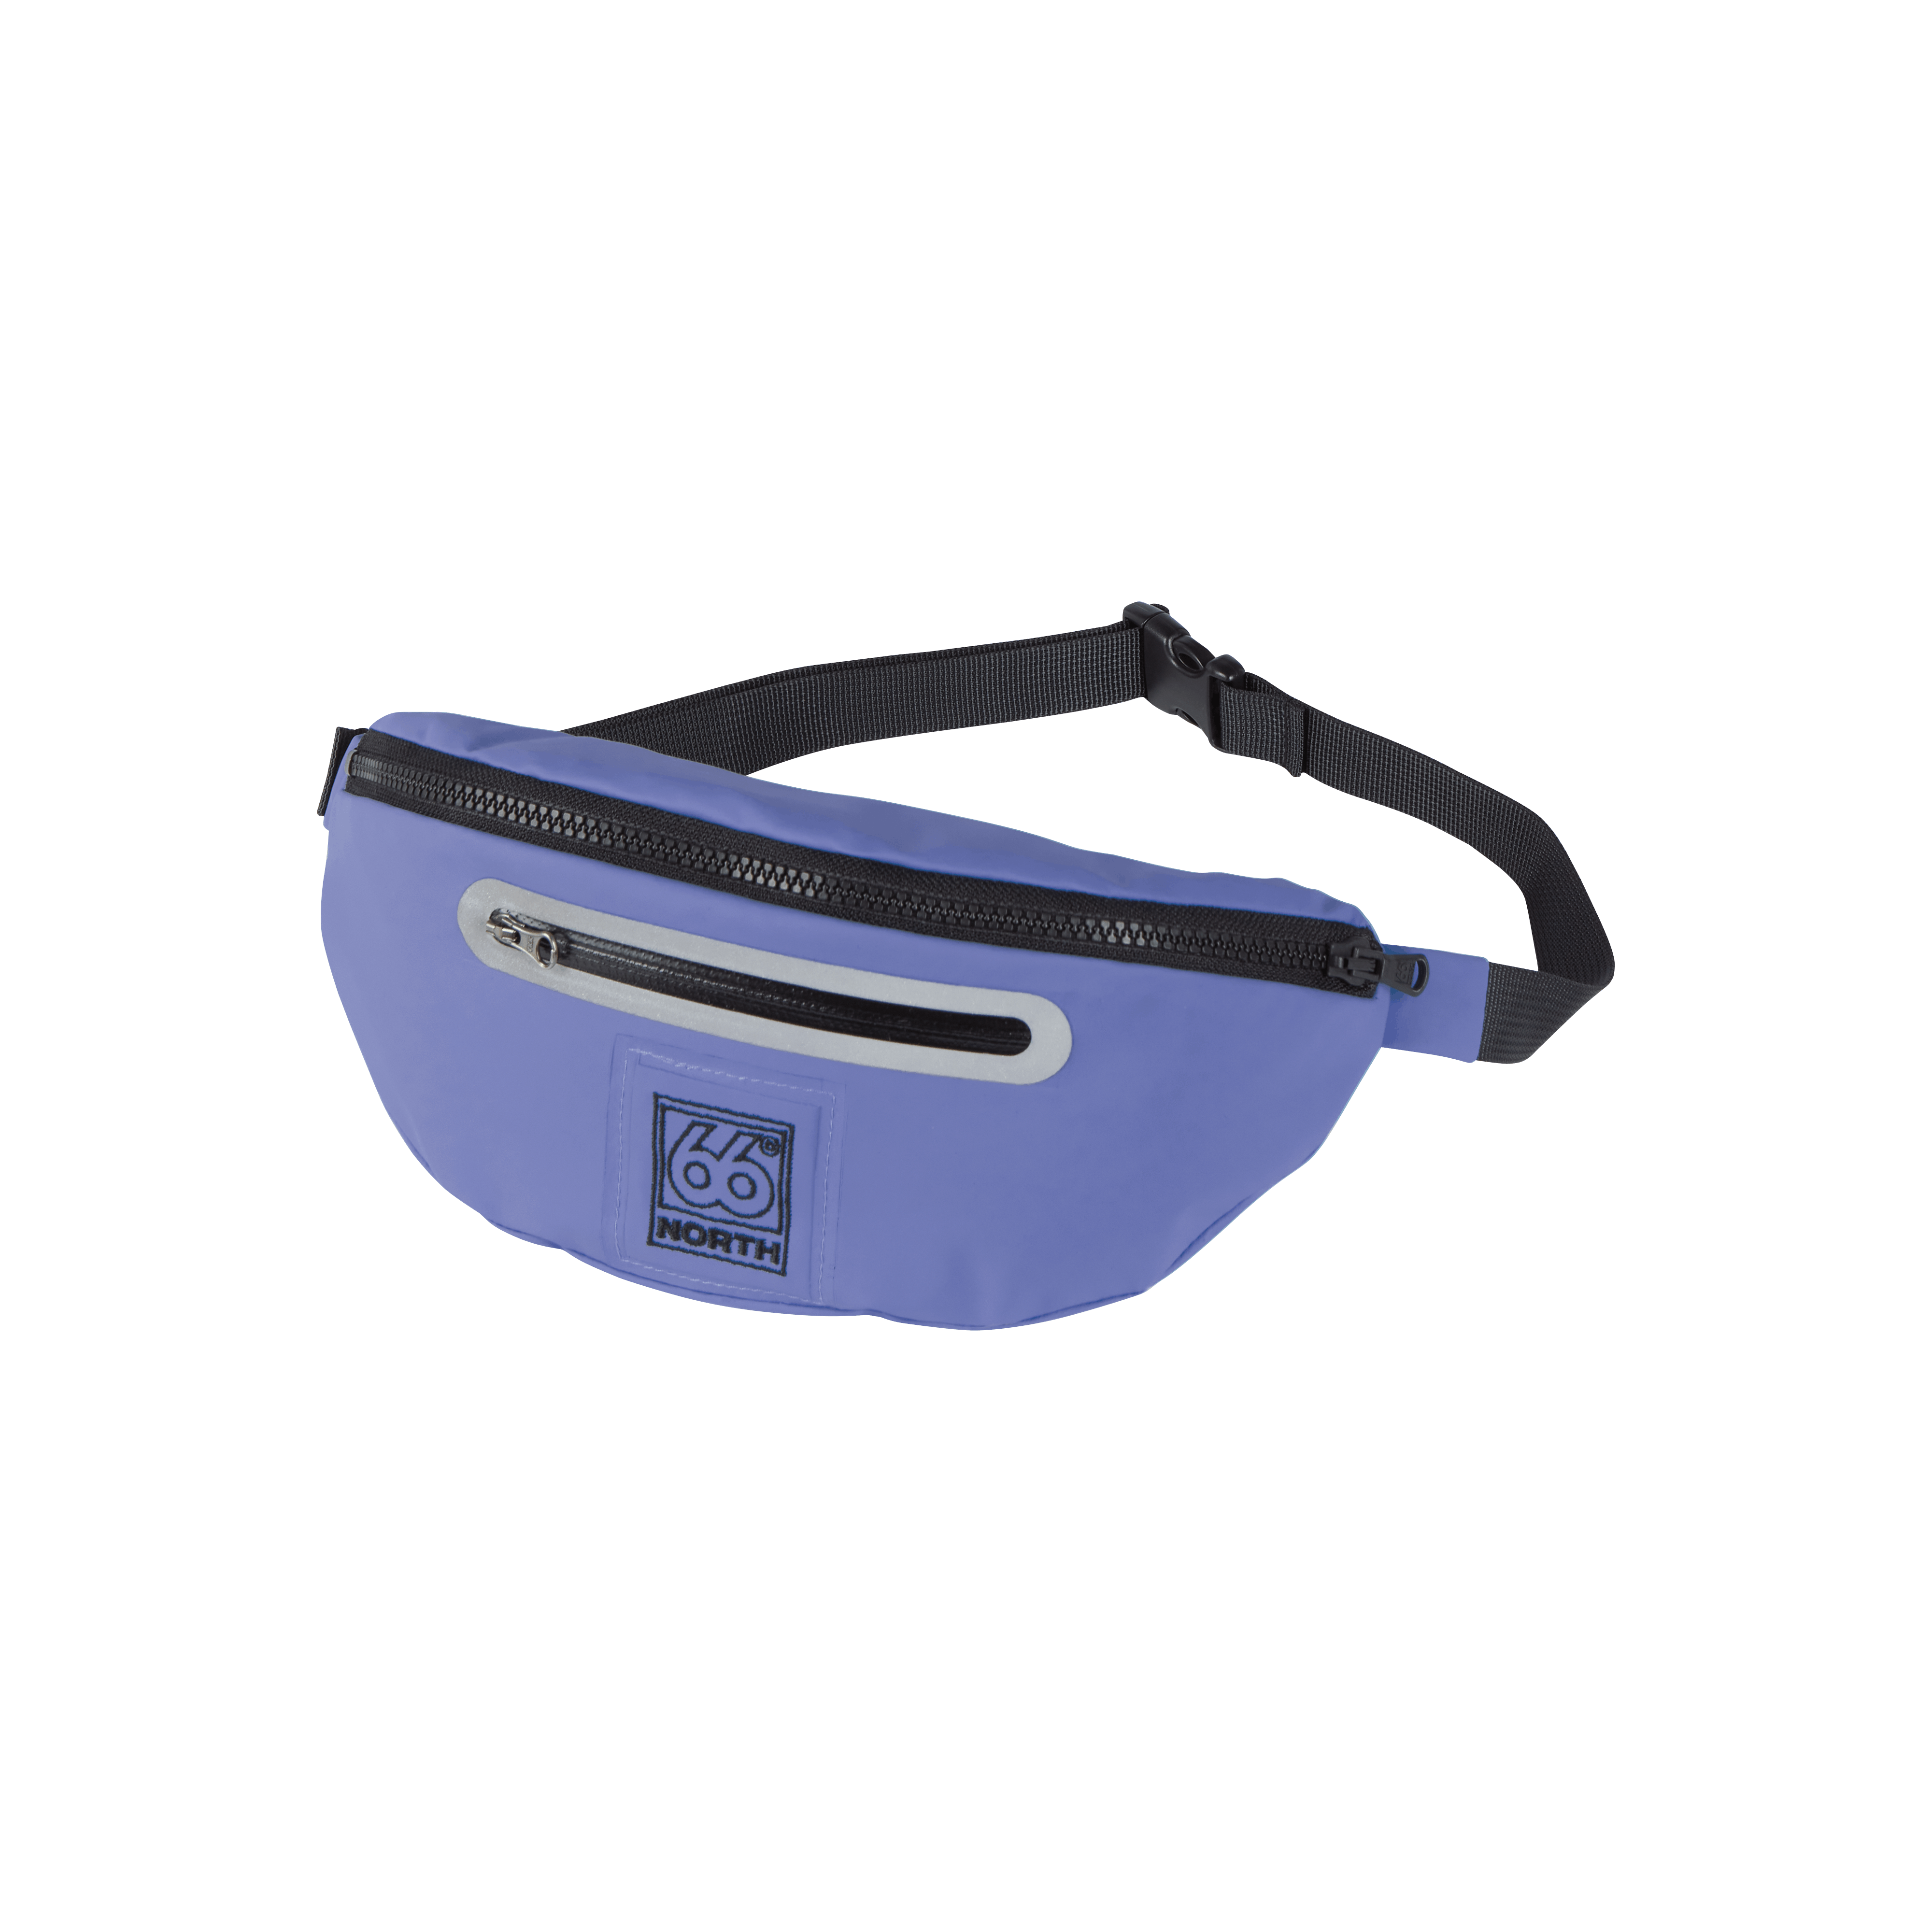 66 North Women's Bum Bag Accessories In Lavender Blue 